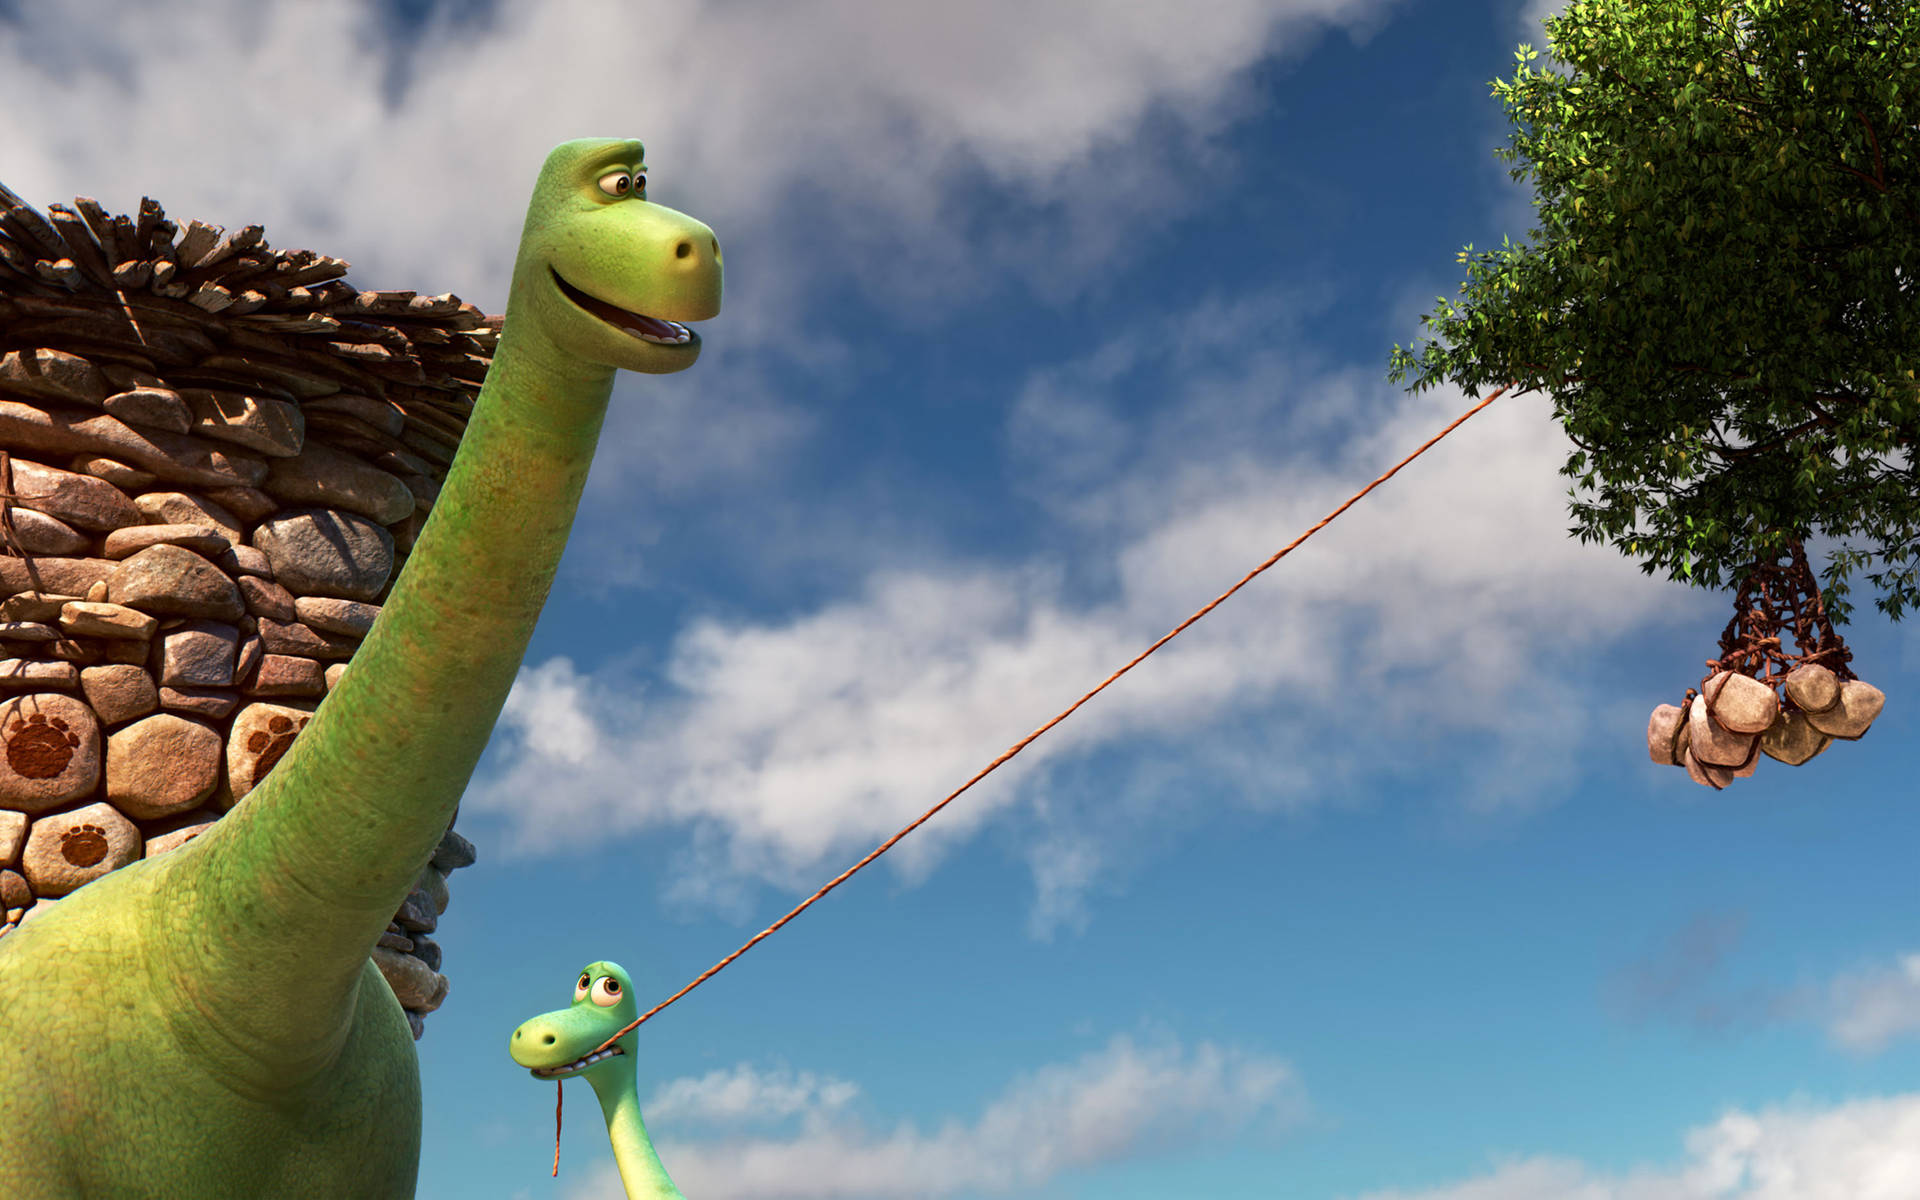 Caption: The Valiant Apatosaurus From The Good Dinosaur Film Background